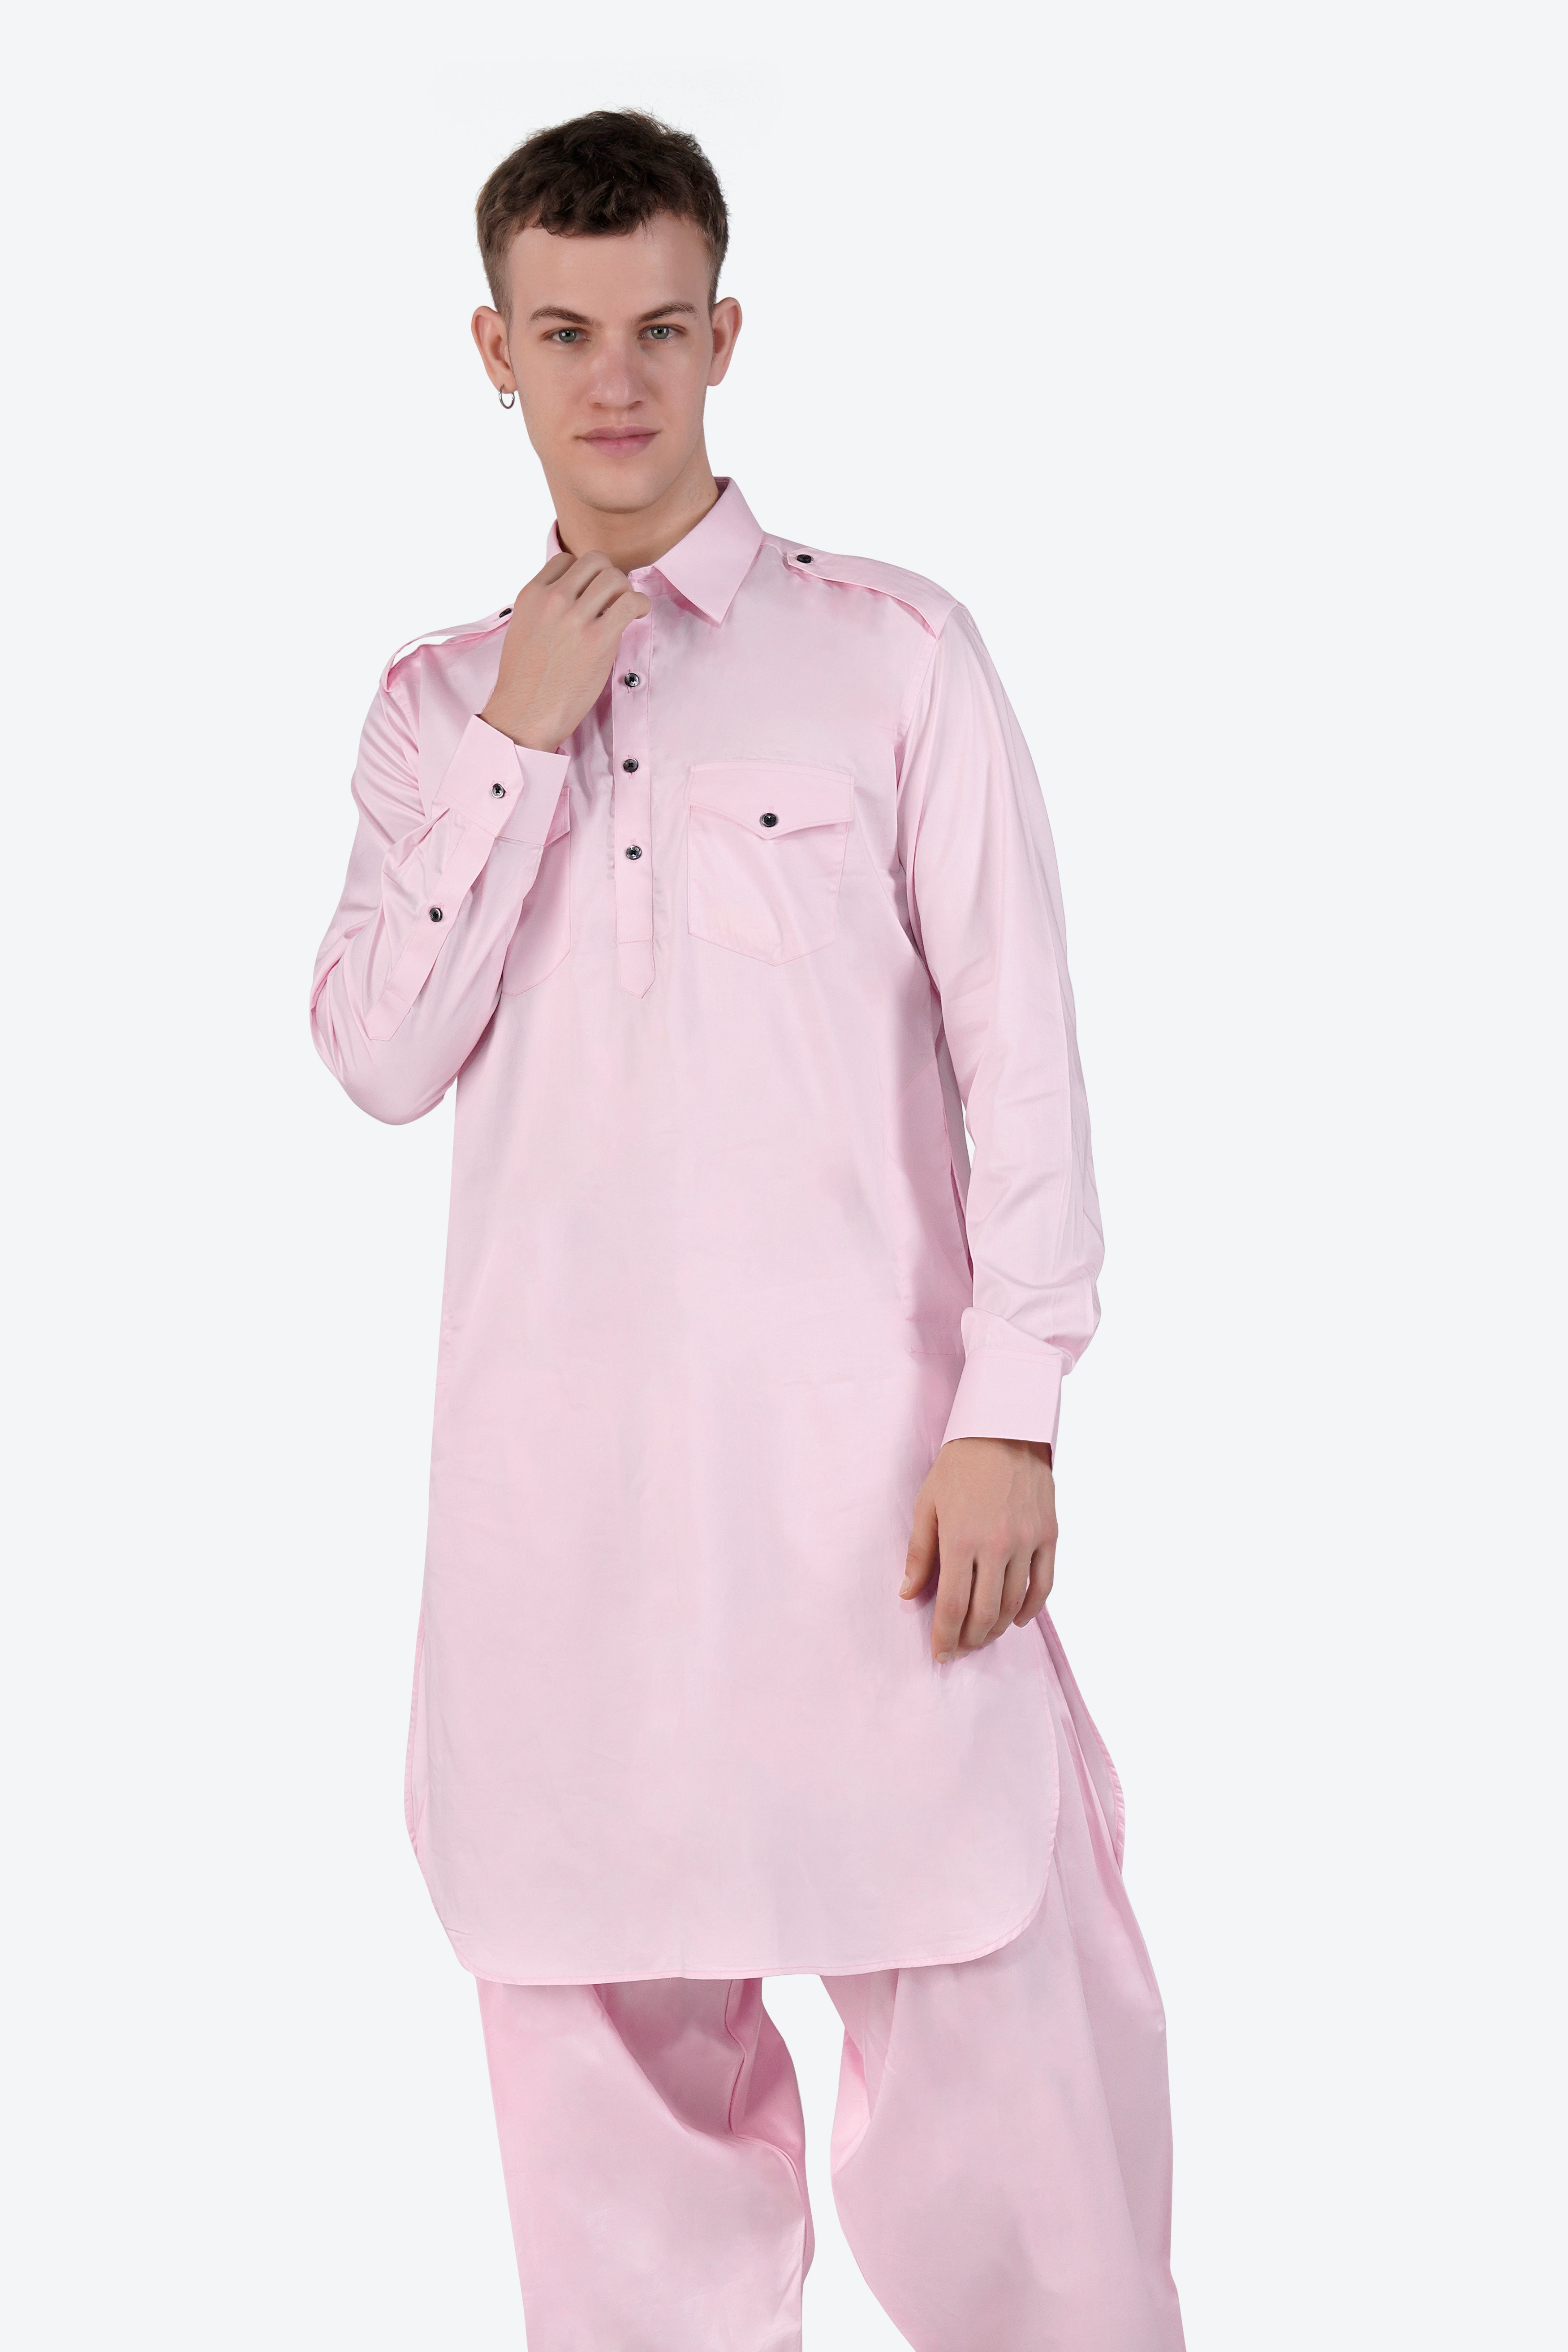 Carousel Pink Subtle Sheen Super Soft Premium Cotton Pathani Set